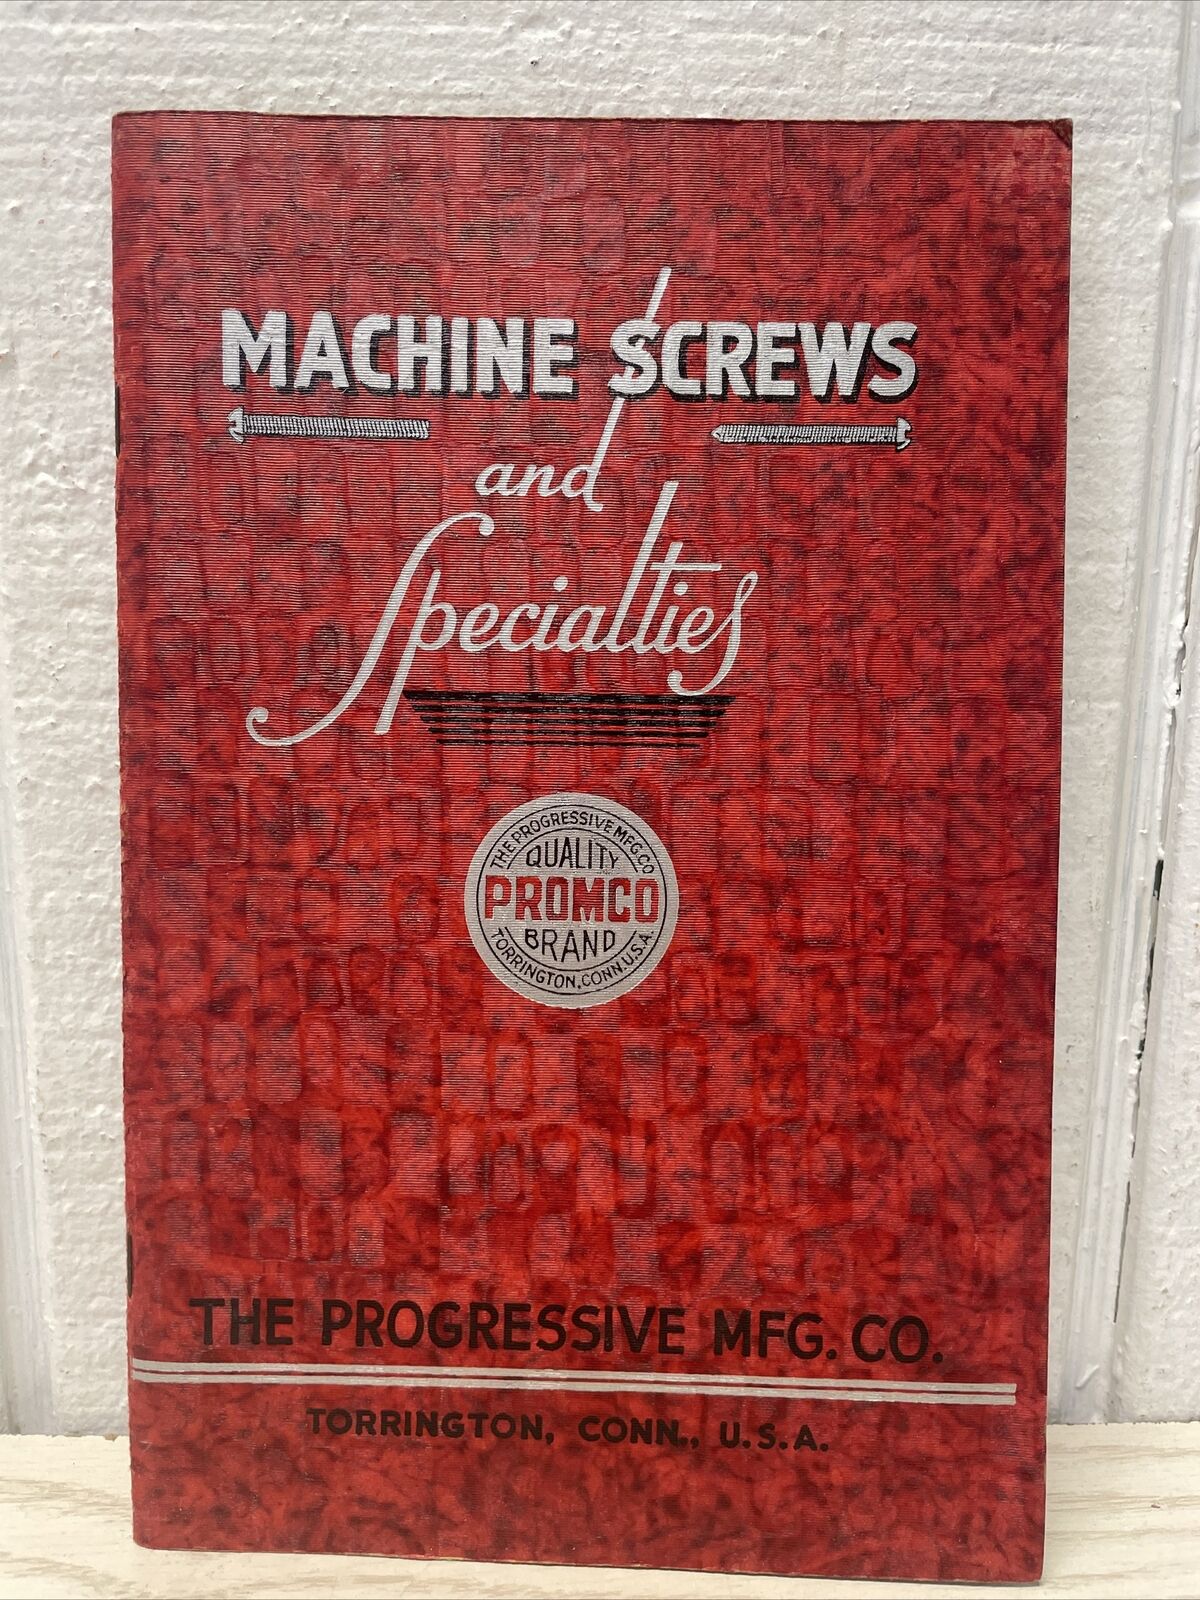 Vintage Progressive MFG Co Machine Screws and Specialties Catalog Booklet